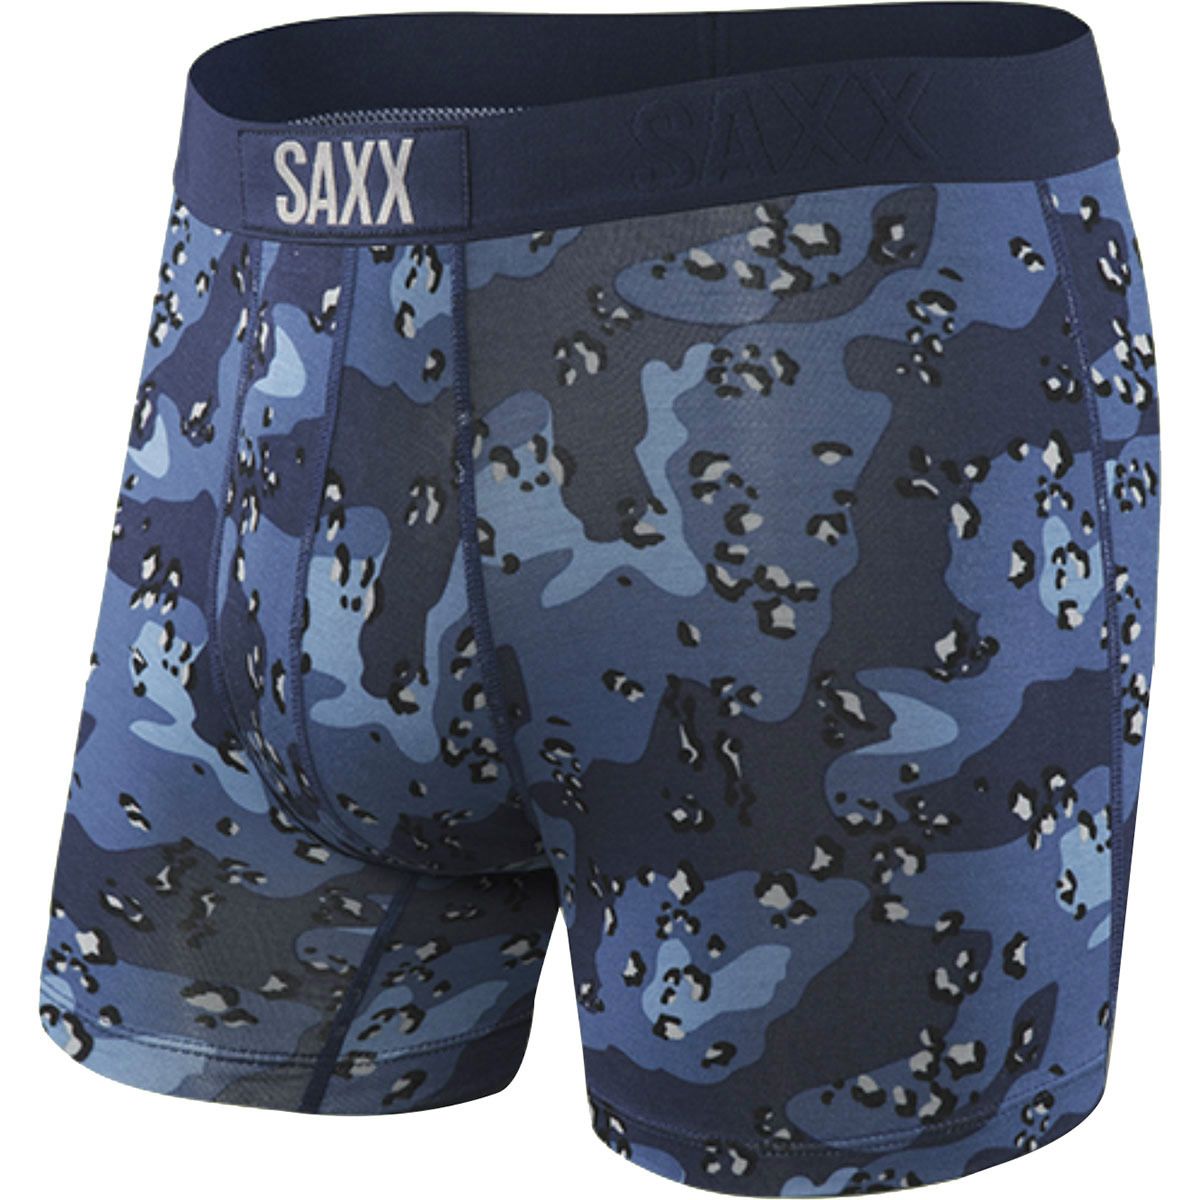 Saxx Vibe Boxer Brief - Men's | Backcountry.com